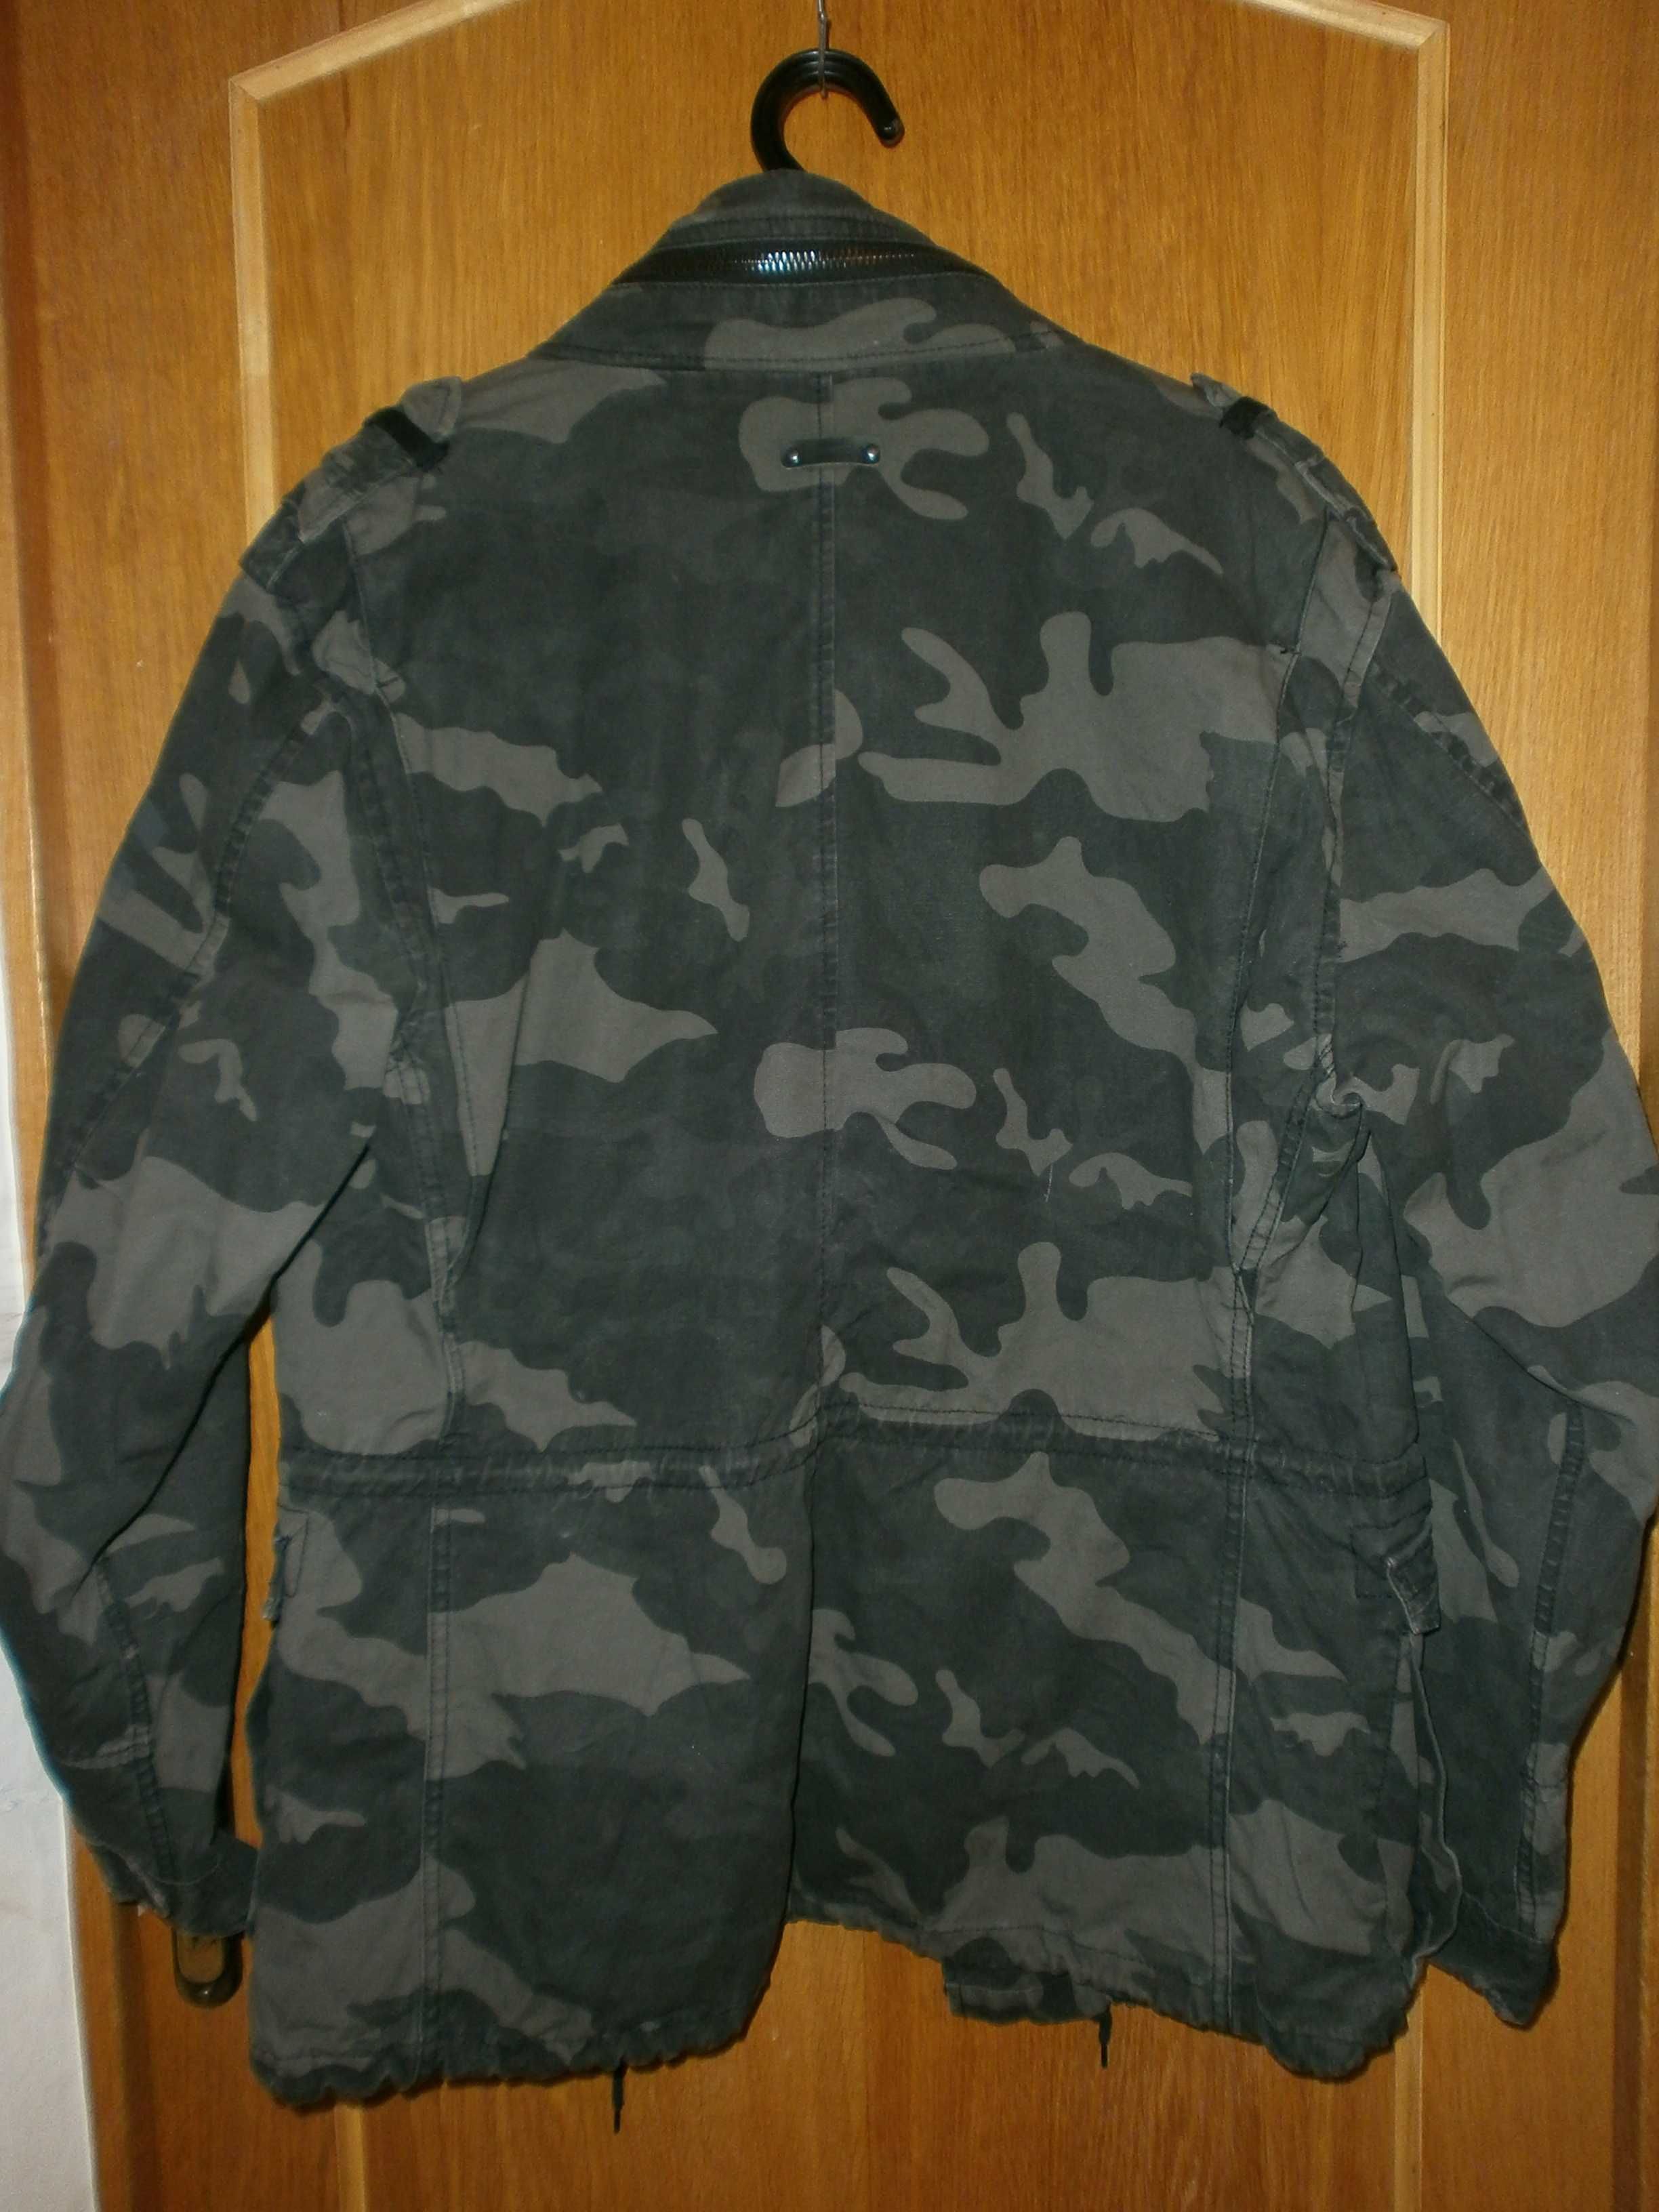 Куртка М65 Brandit Giant, камуфляж, разм. M, наш 52. ПОГ-60 см